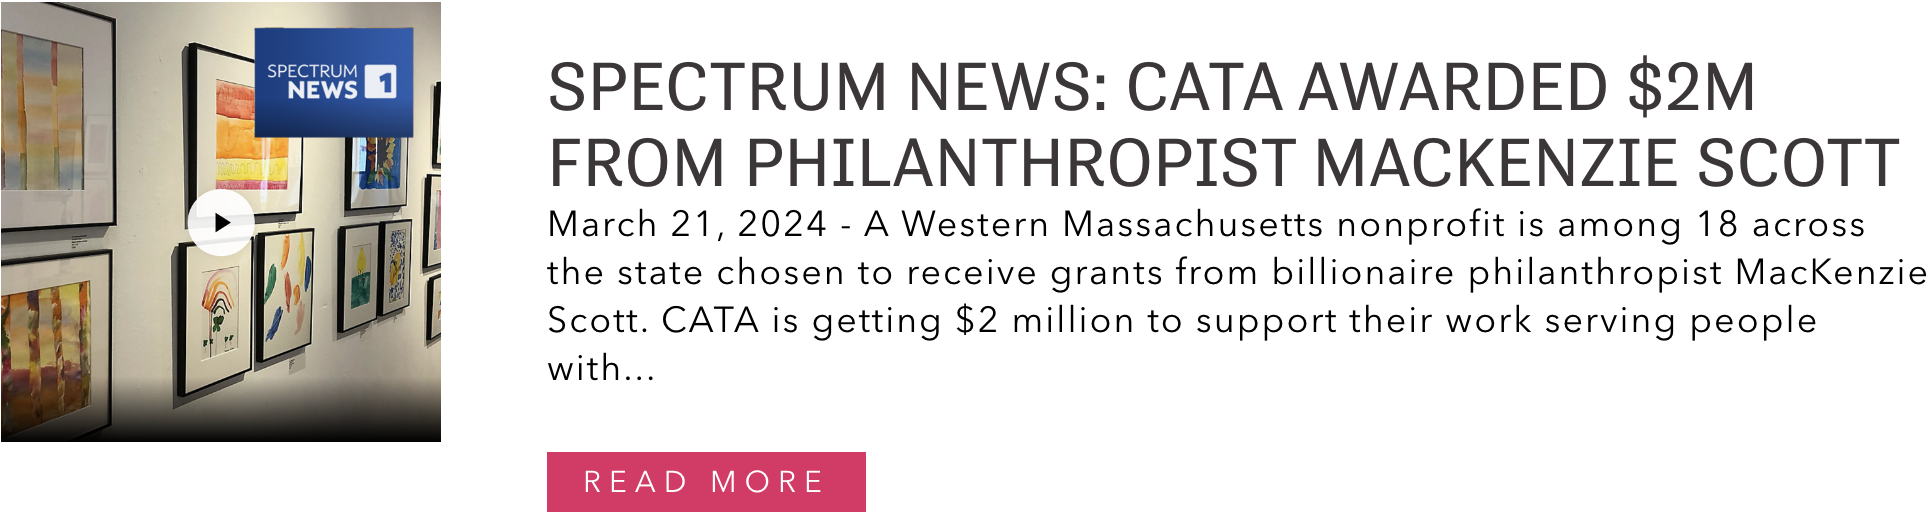 Link to Spectrum News article "CATA AWARDED $2M FROM PHILANTHROPIST MACKENZIE SCOTT"